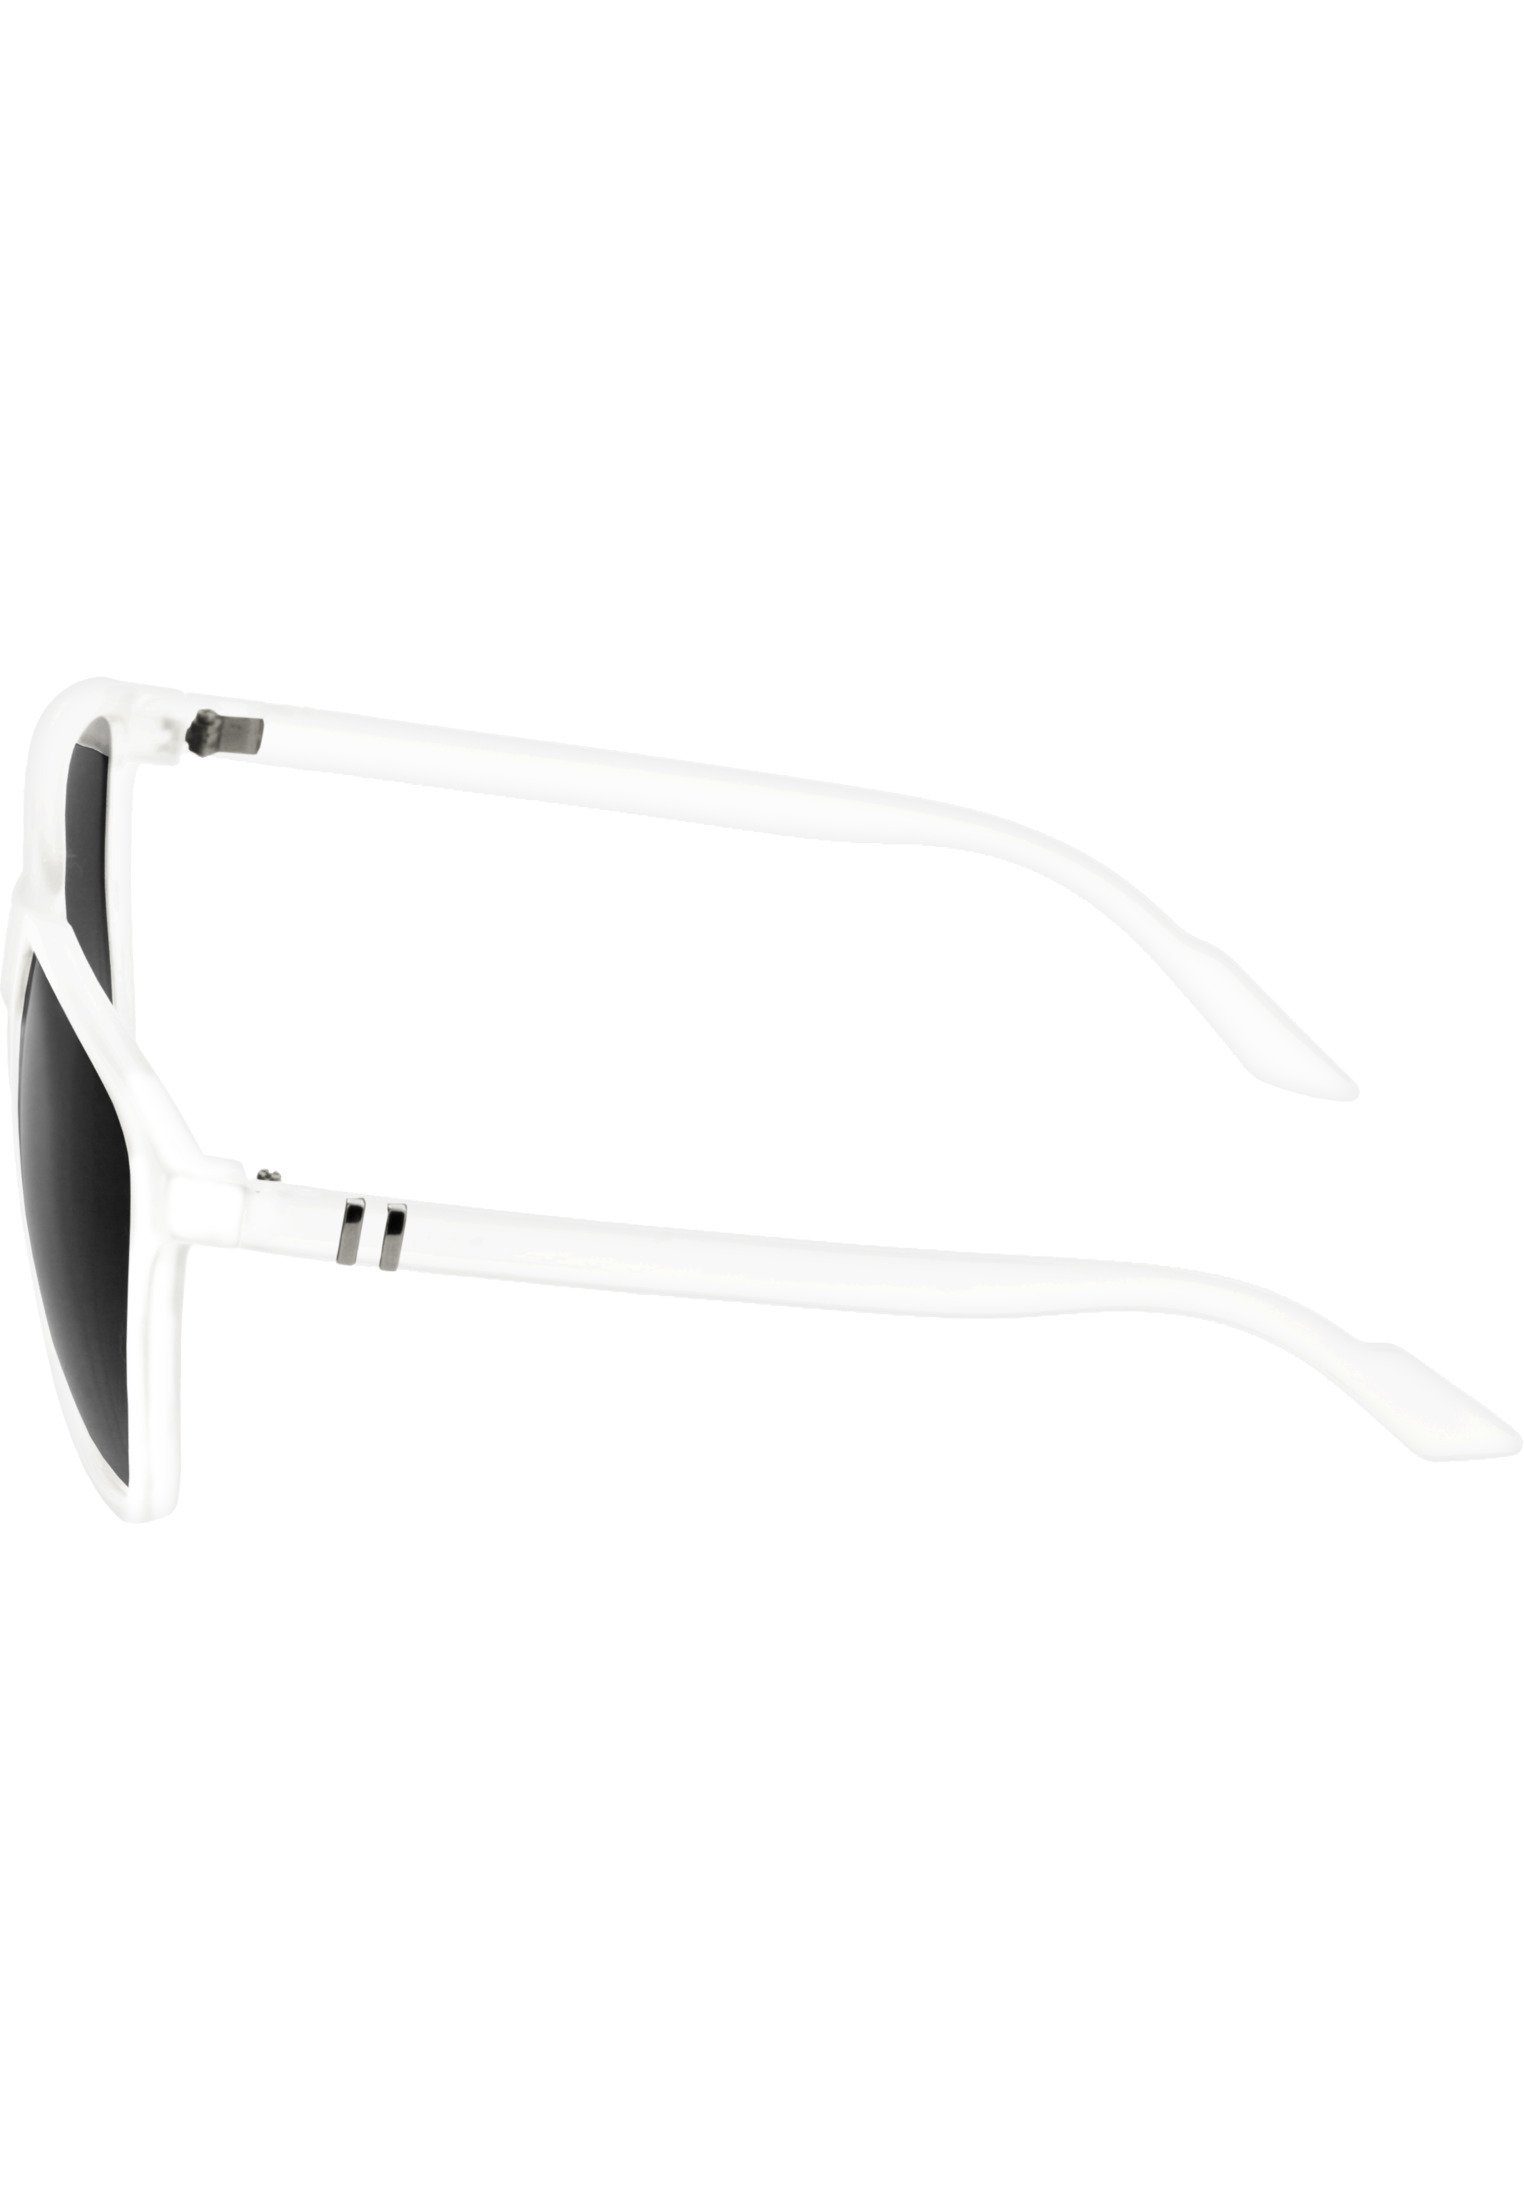 Sonnenbrille MSTRDS Chirwa Sunglasses Accessoires white